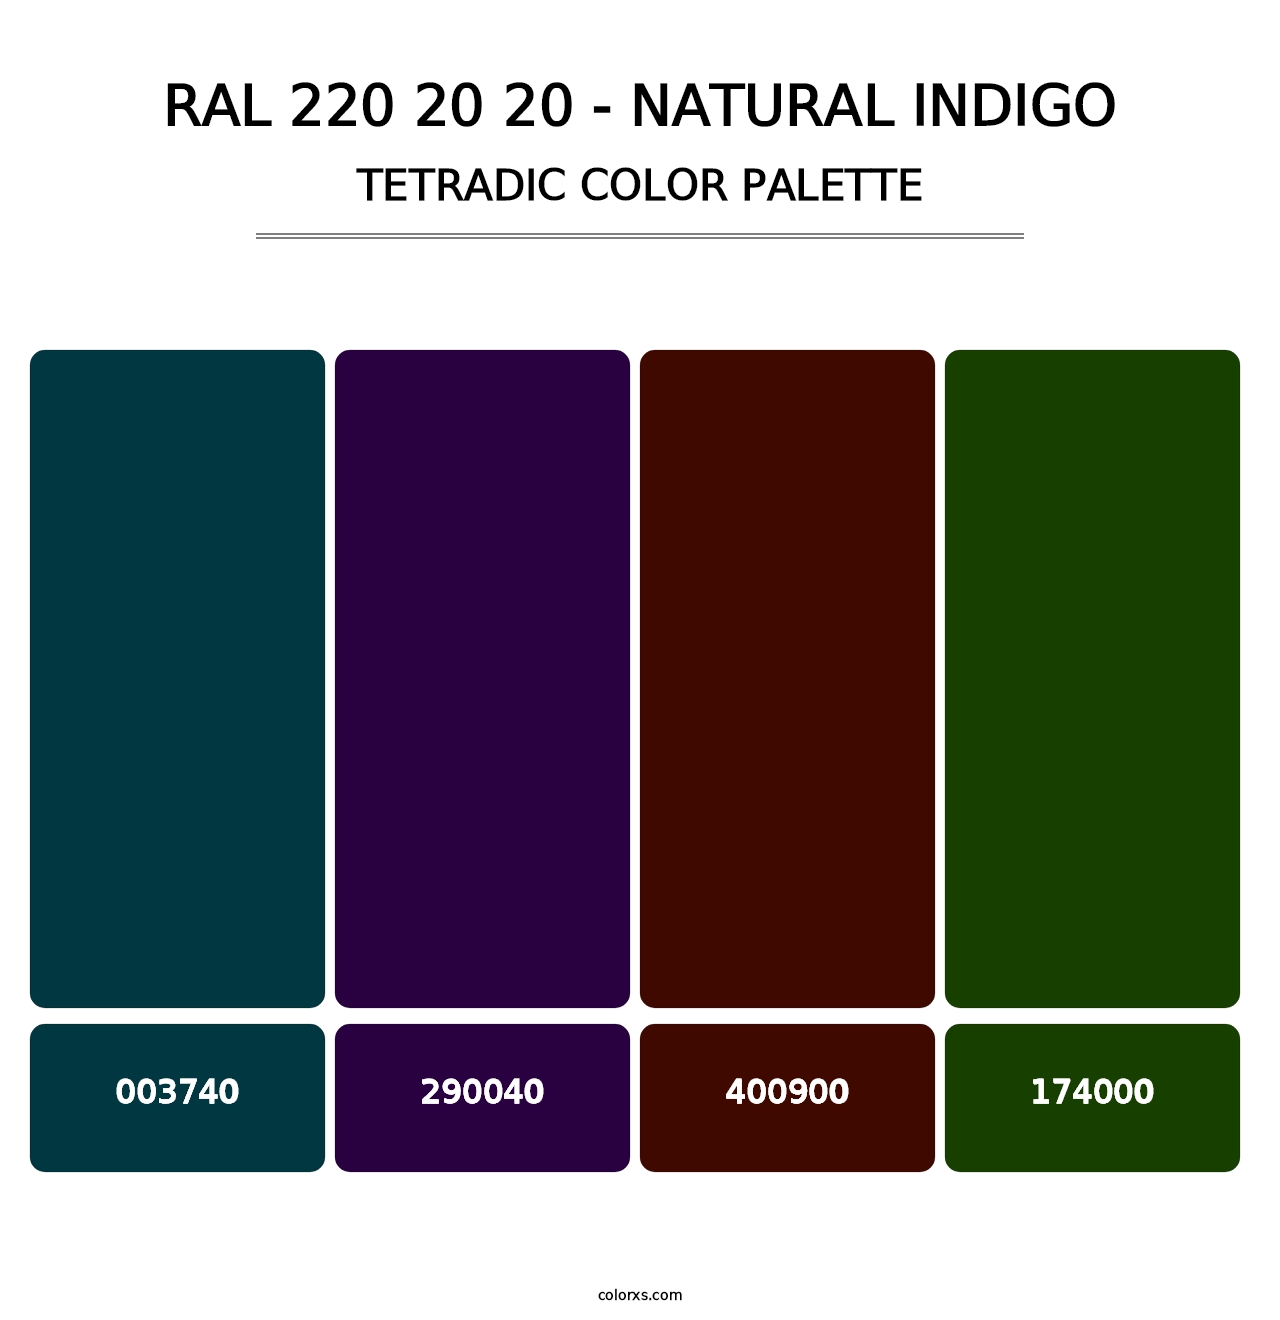 RAL 220 20 20 - Natural Indigo - Tetradic Color Palette